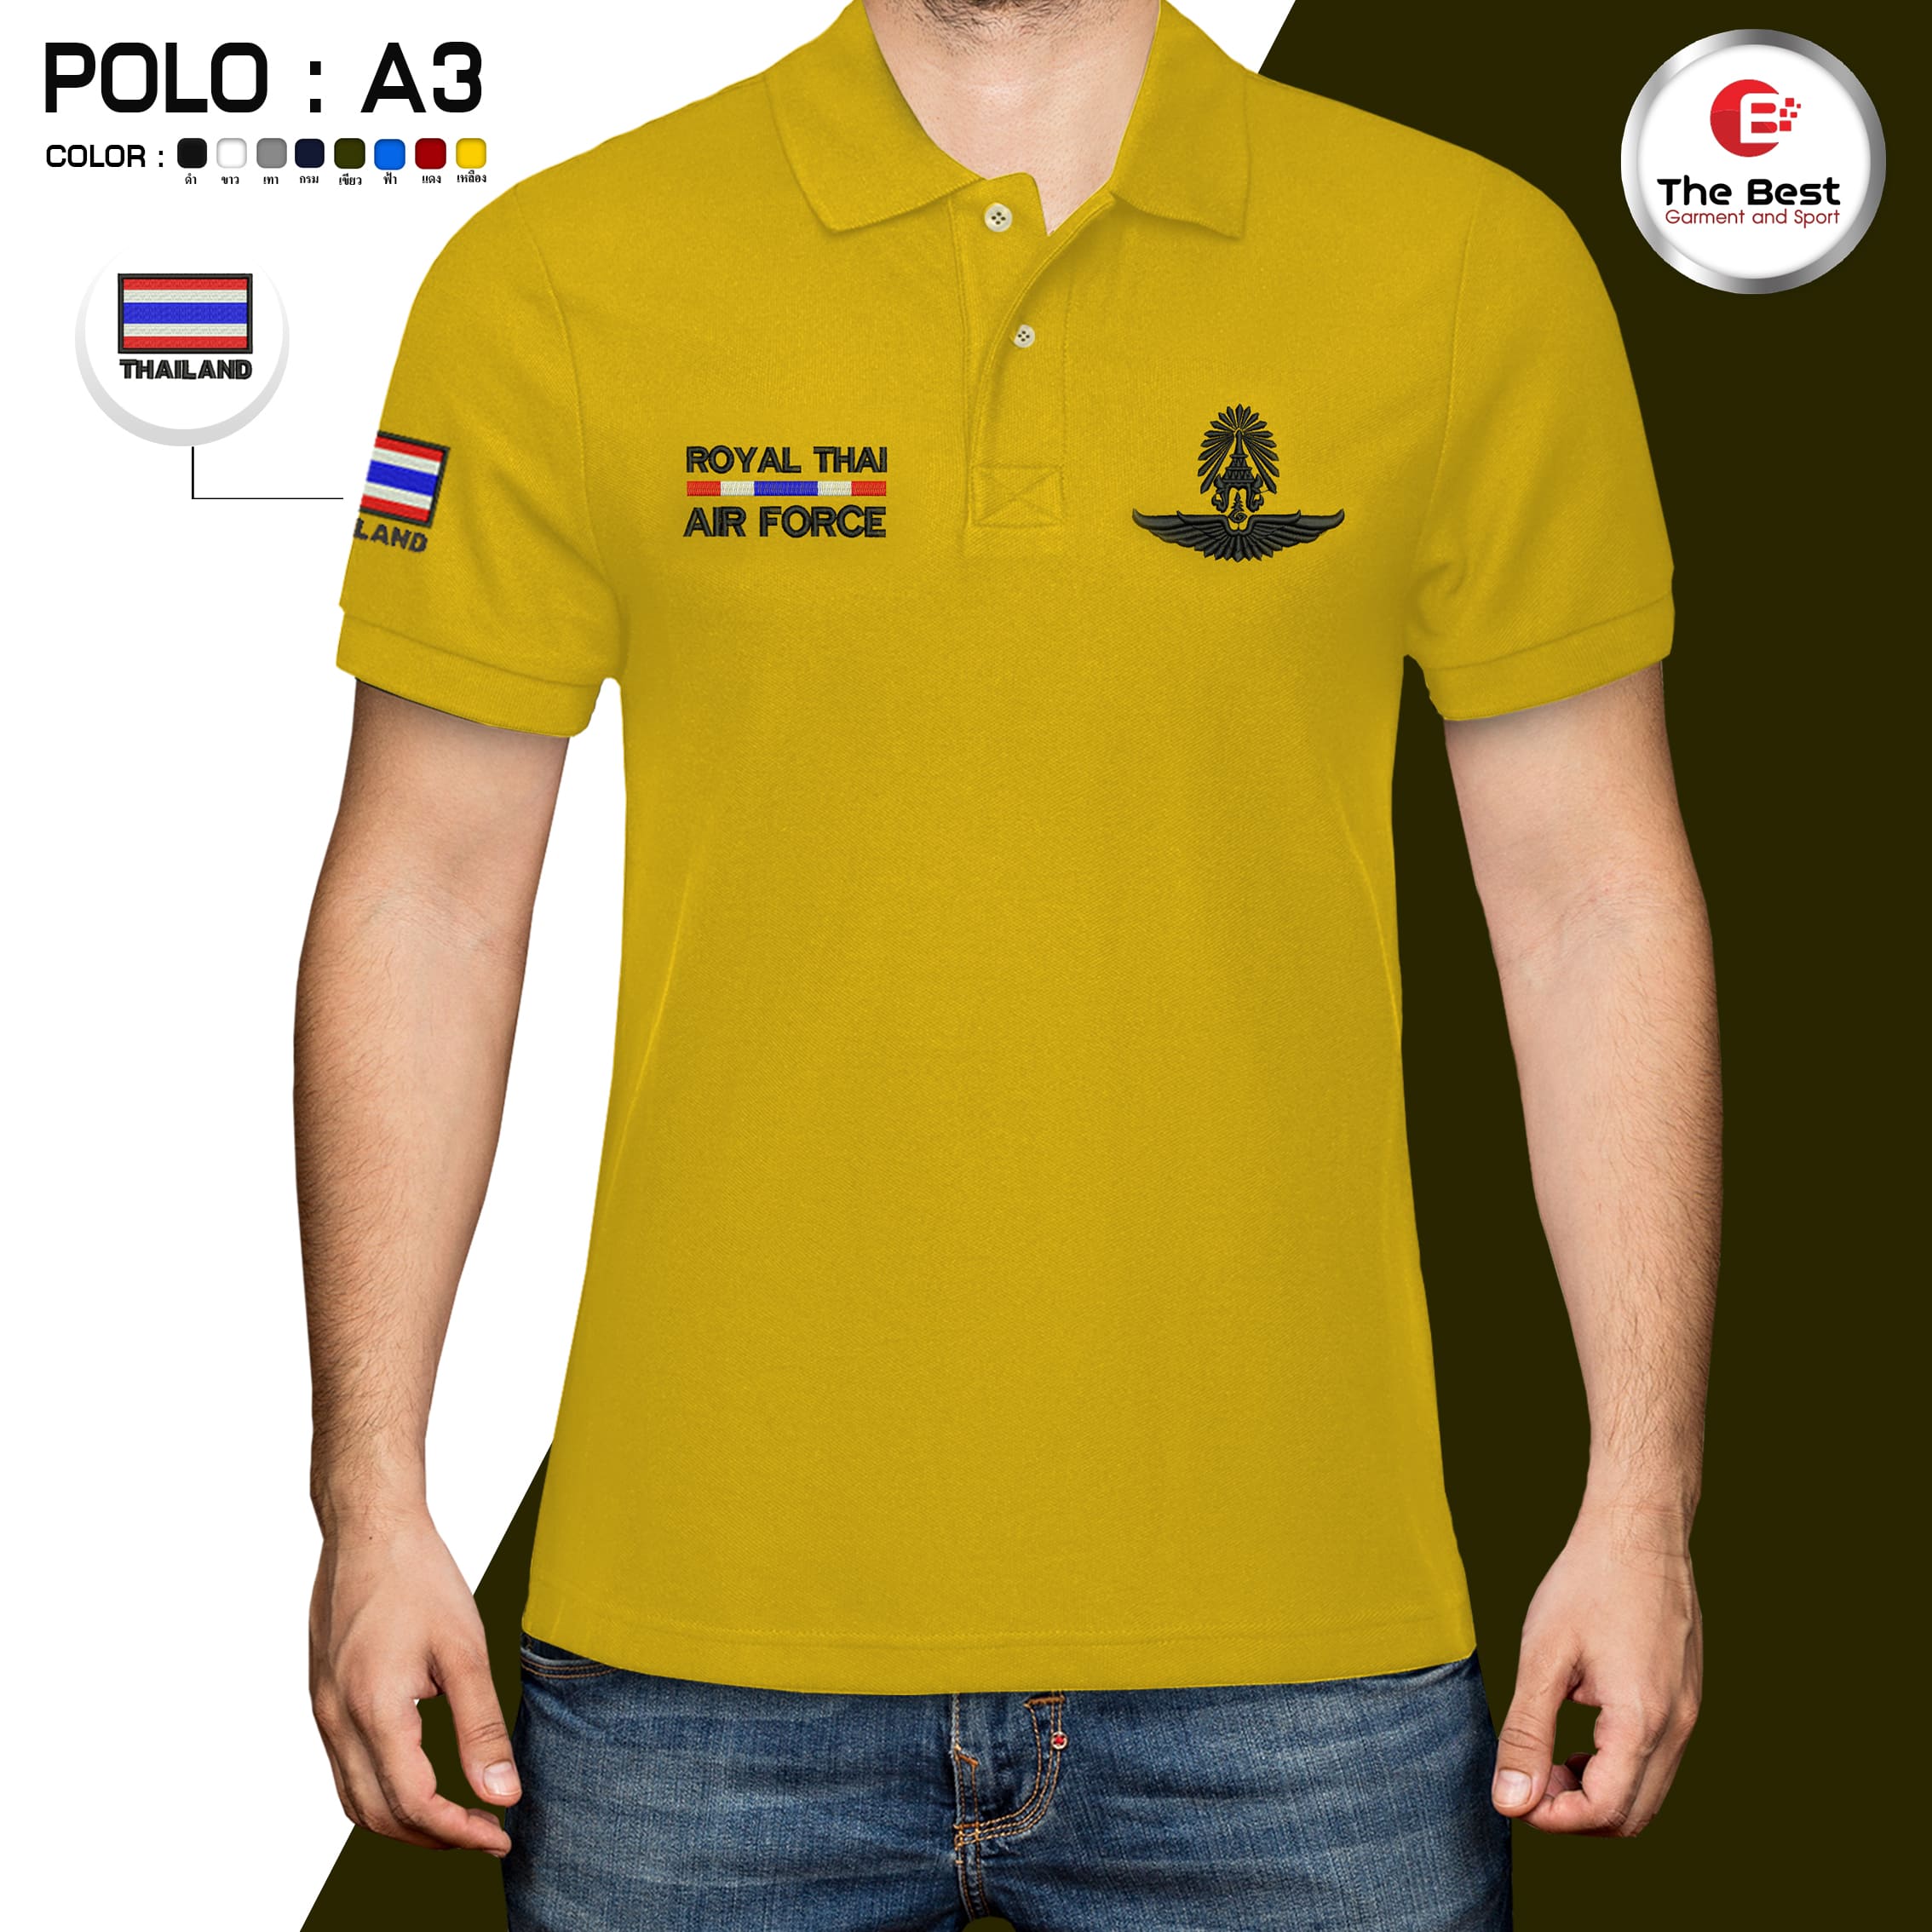 POLO-ARMY3 เสื้อโปโล ทหาร กองทัพอากาศ